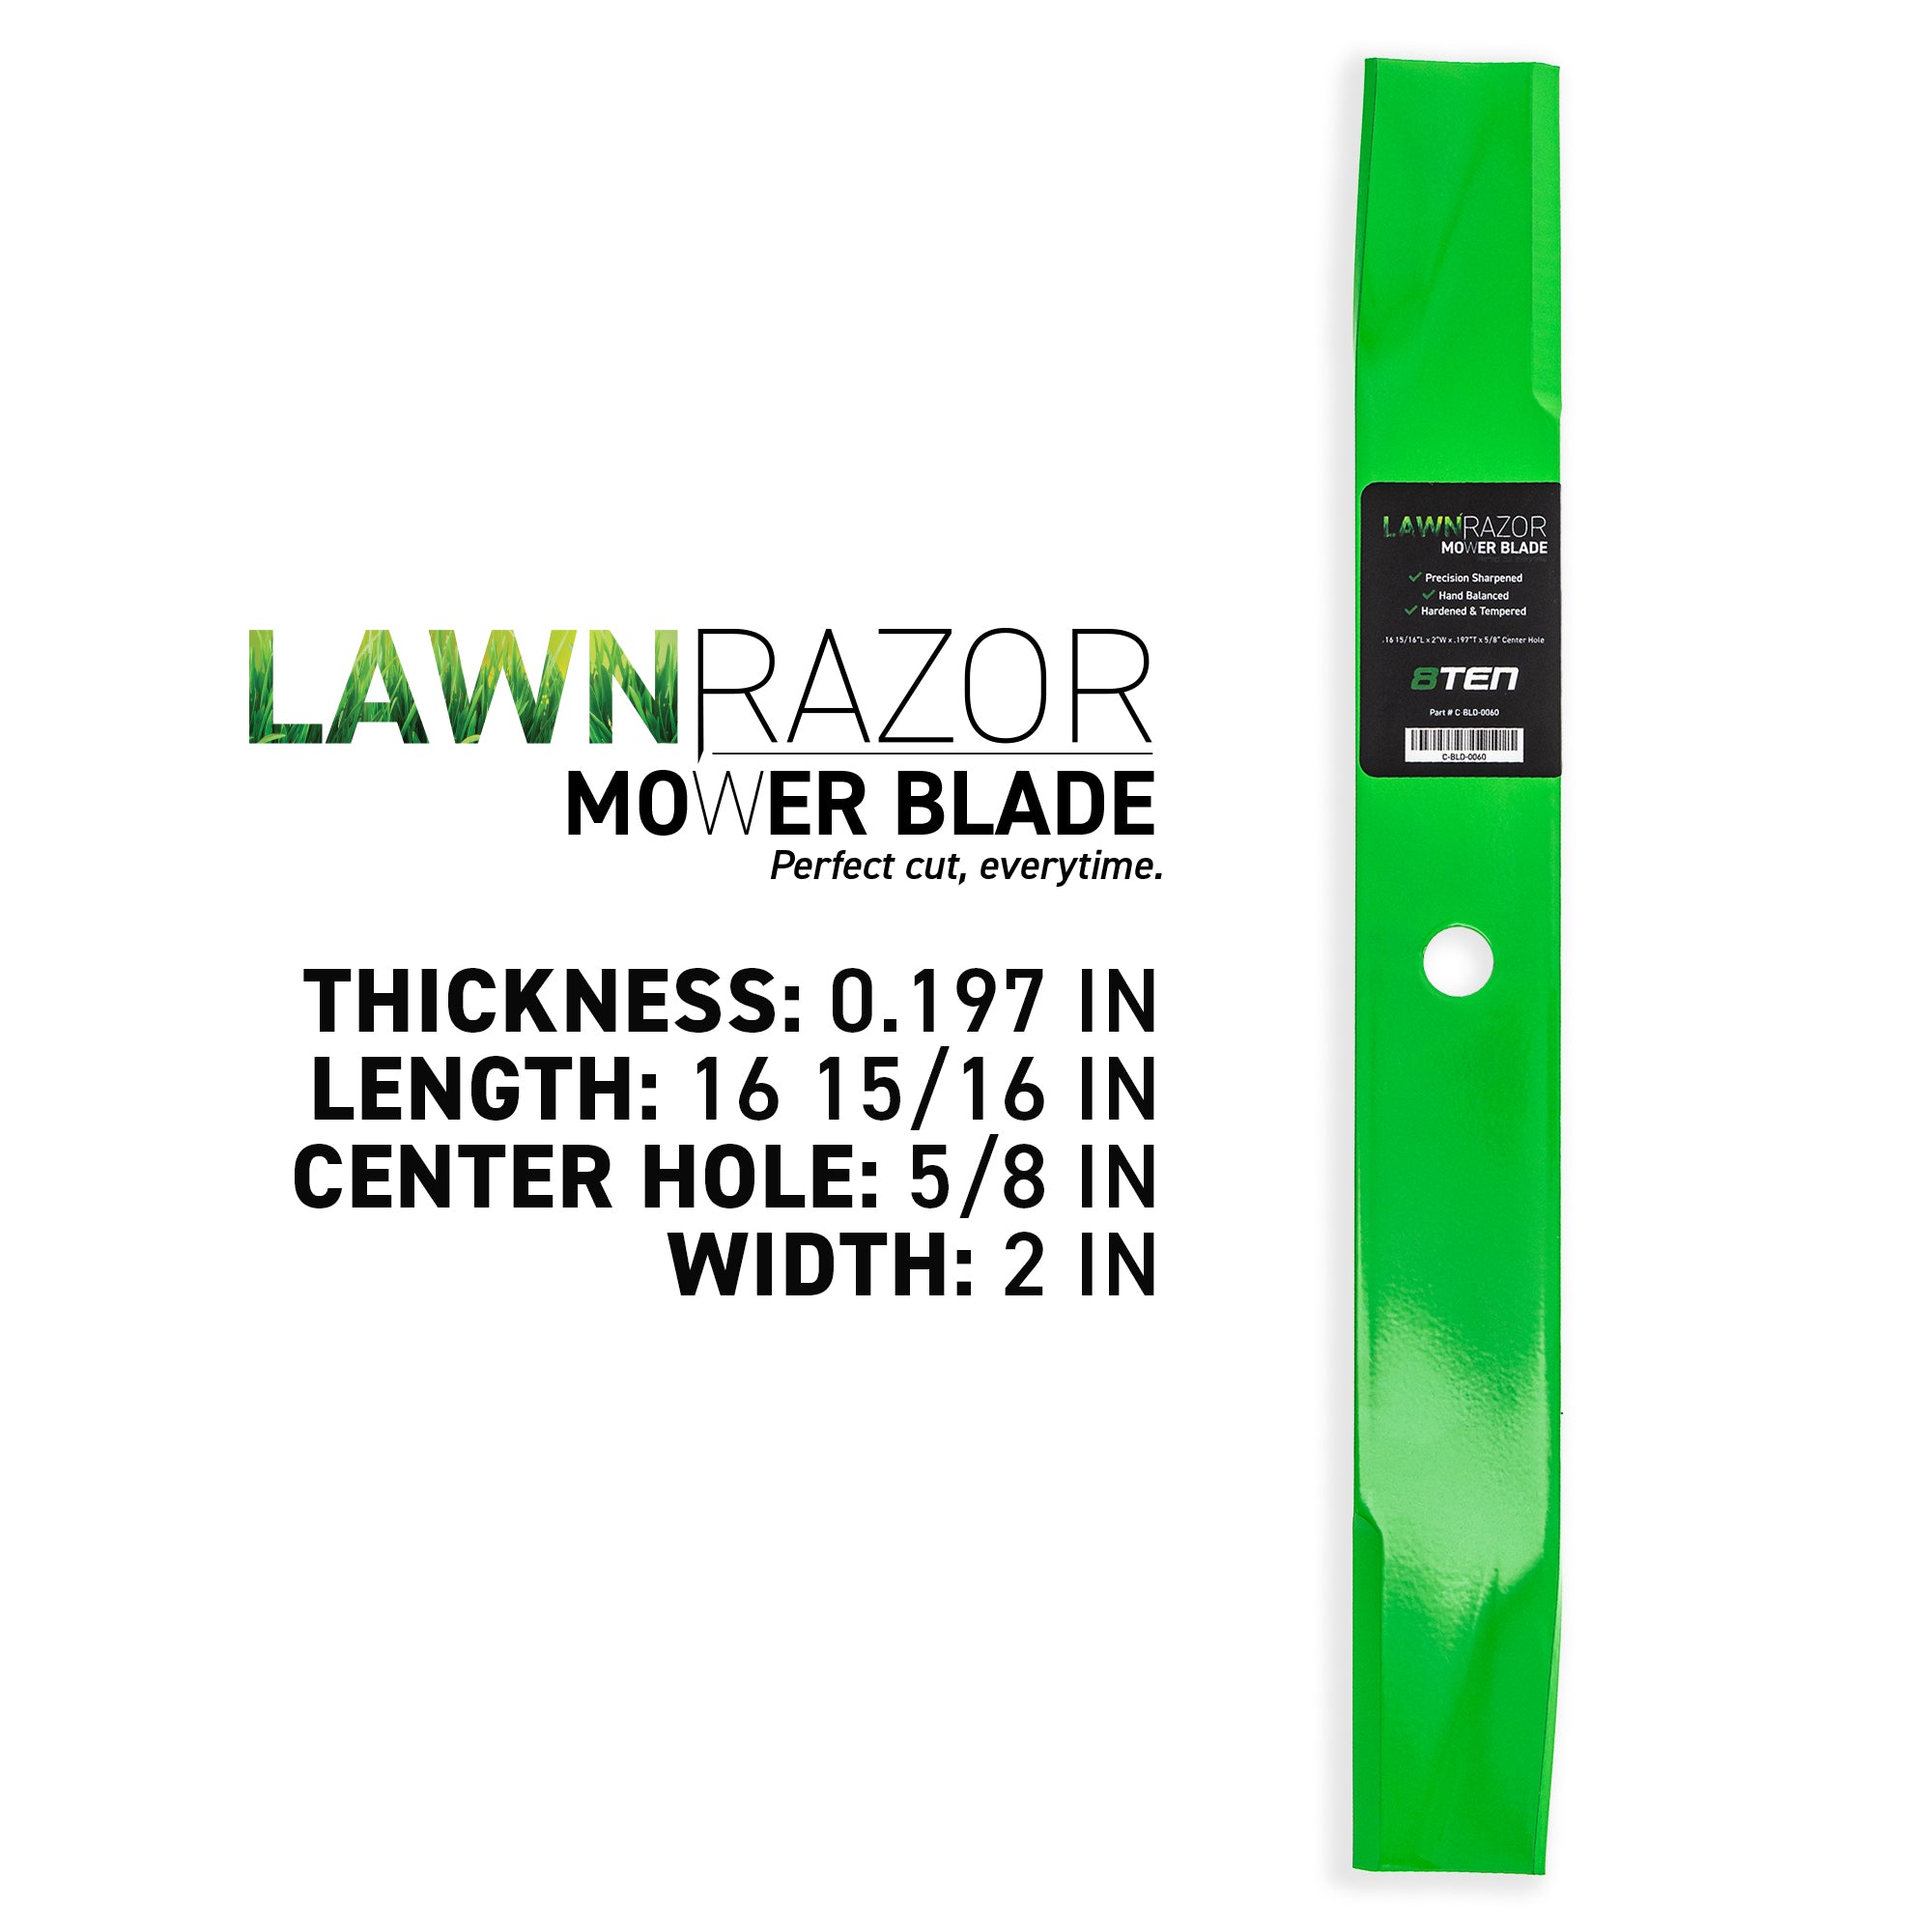 8TEN LawnRAZOR Mower Blade 2-Pack 046998 08861600